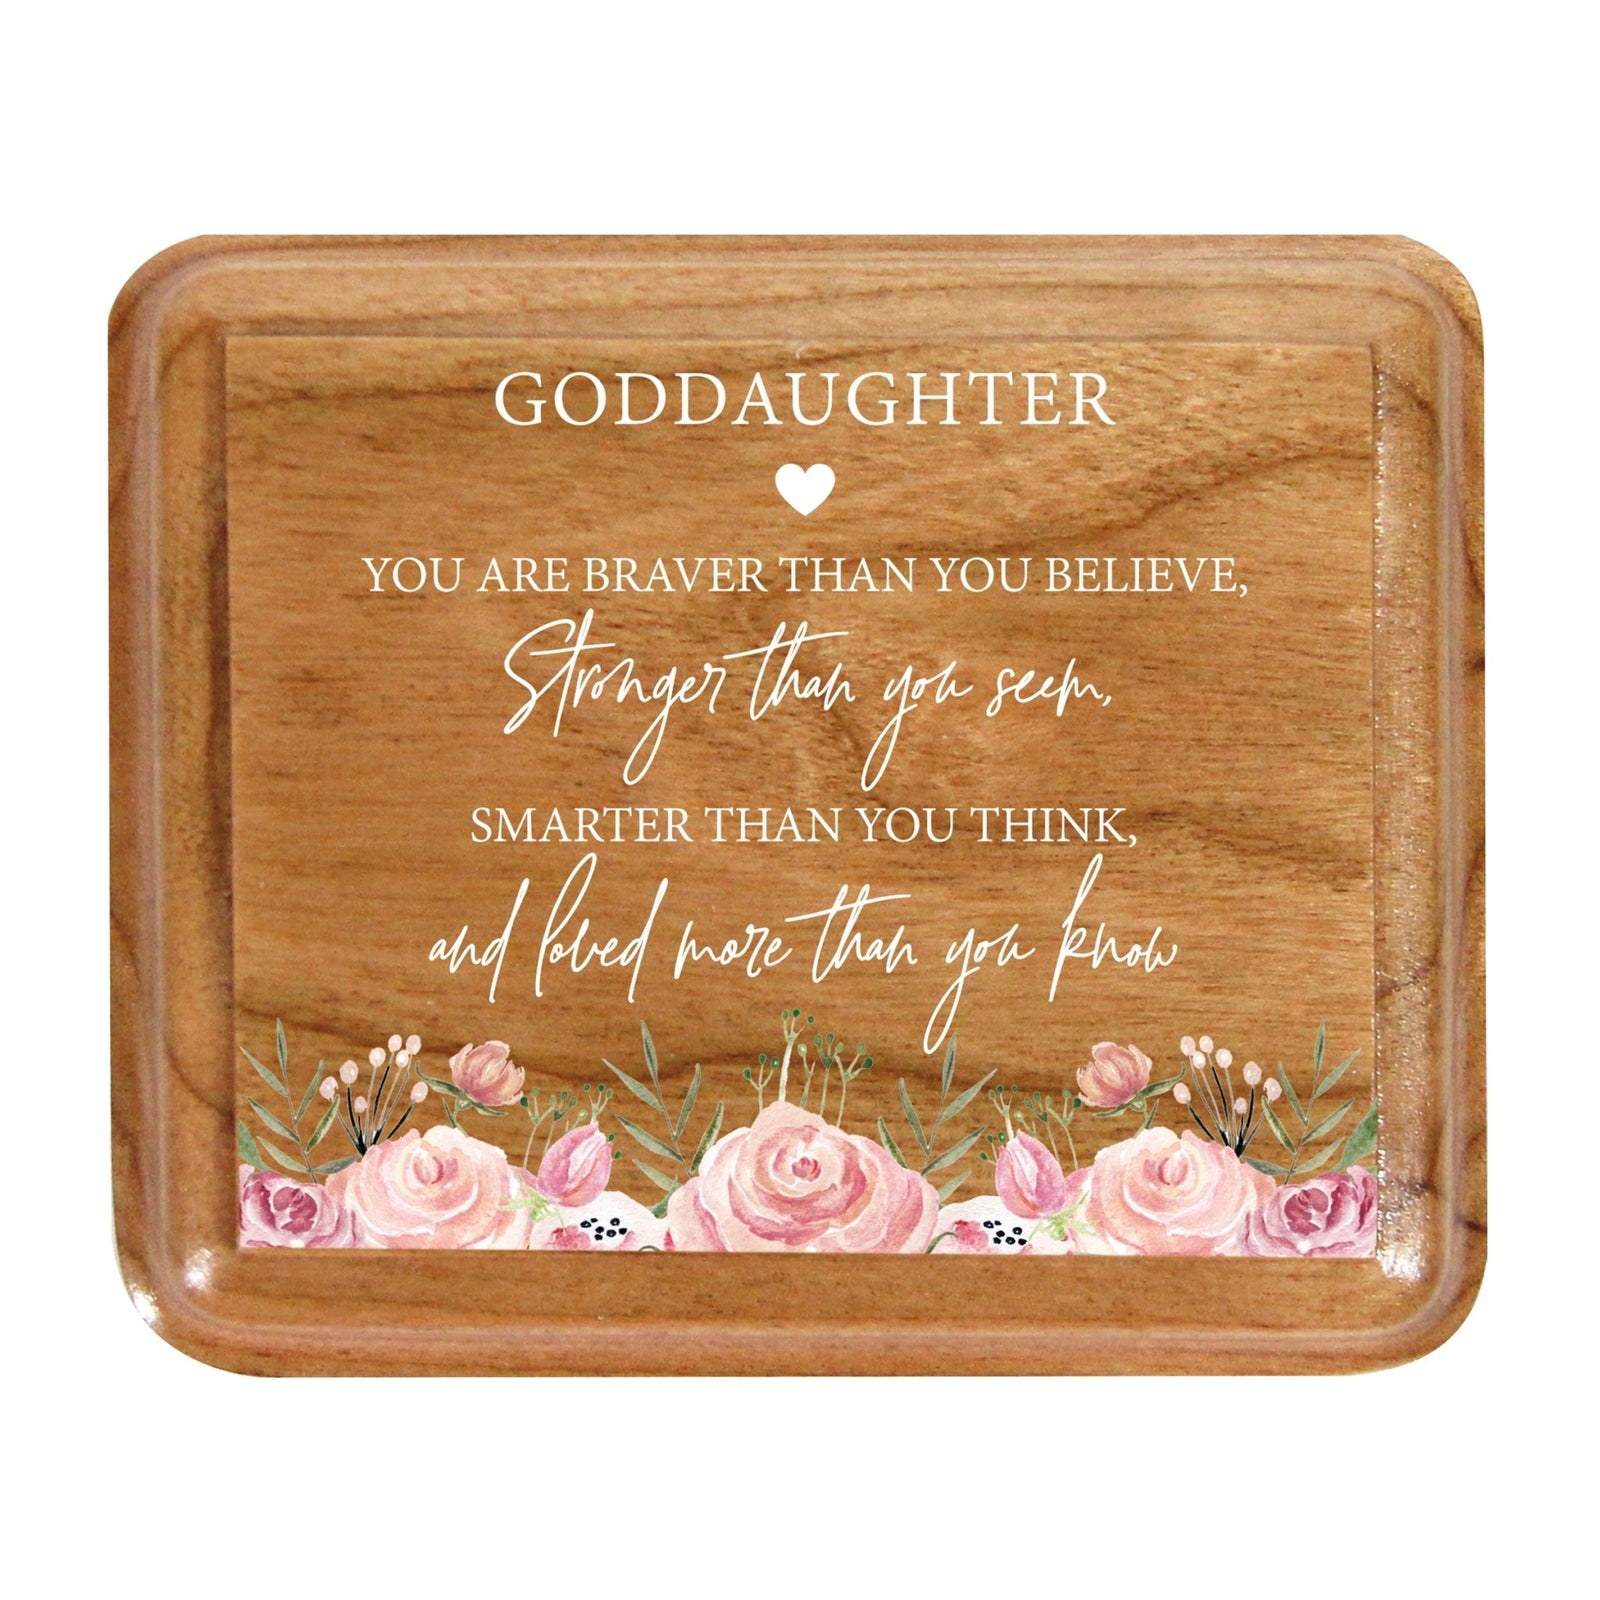 Modern Keepsake Box Inspirational Quotes for Goddaughter 3.5x3 Always Remember - LifeSong Milestones